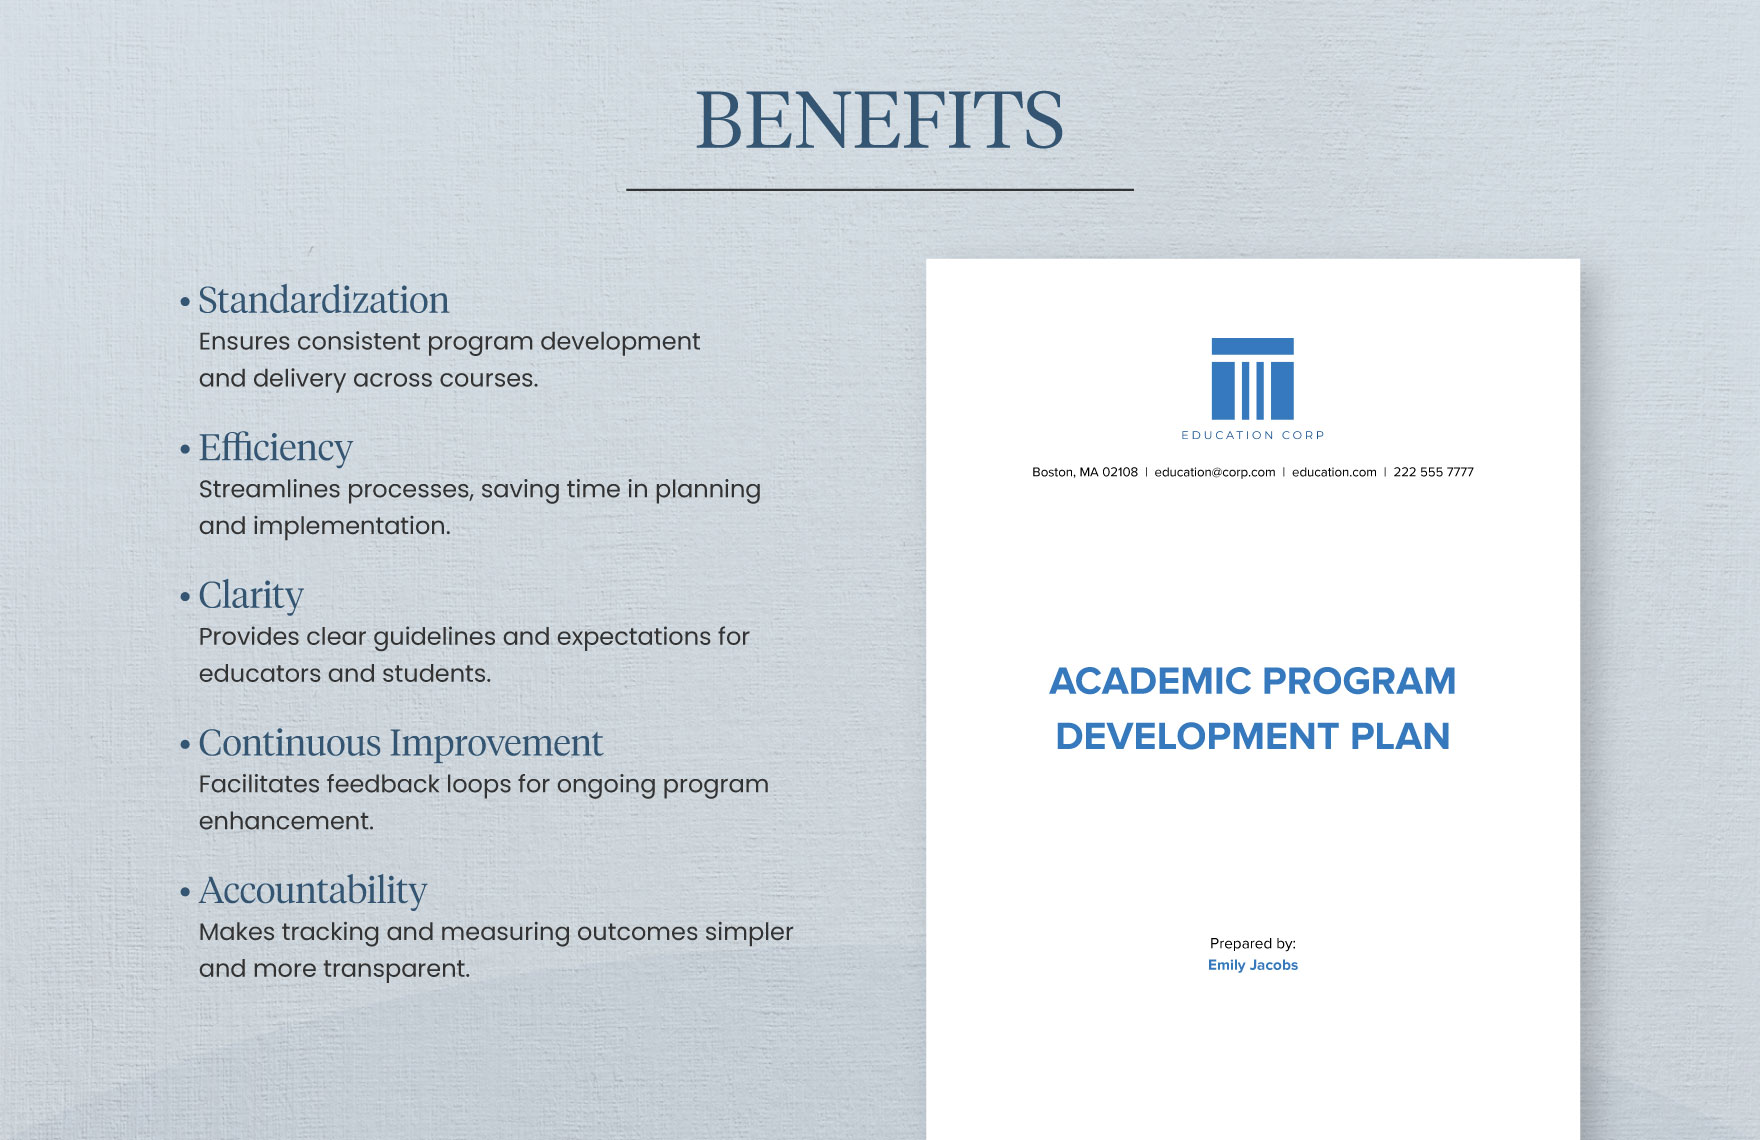 Academic Program Development Plan Template